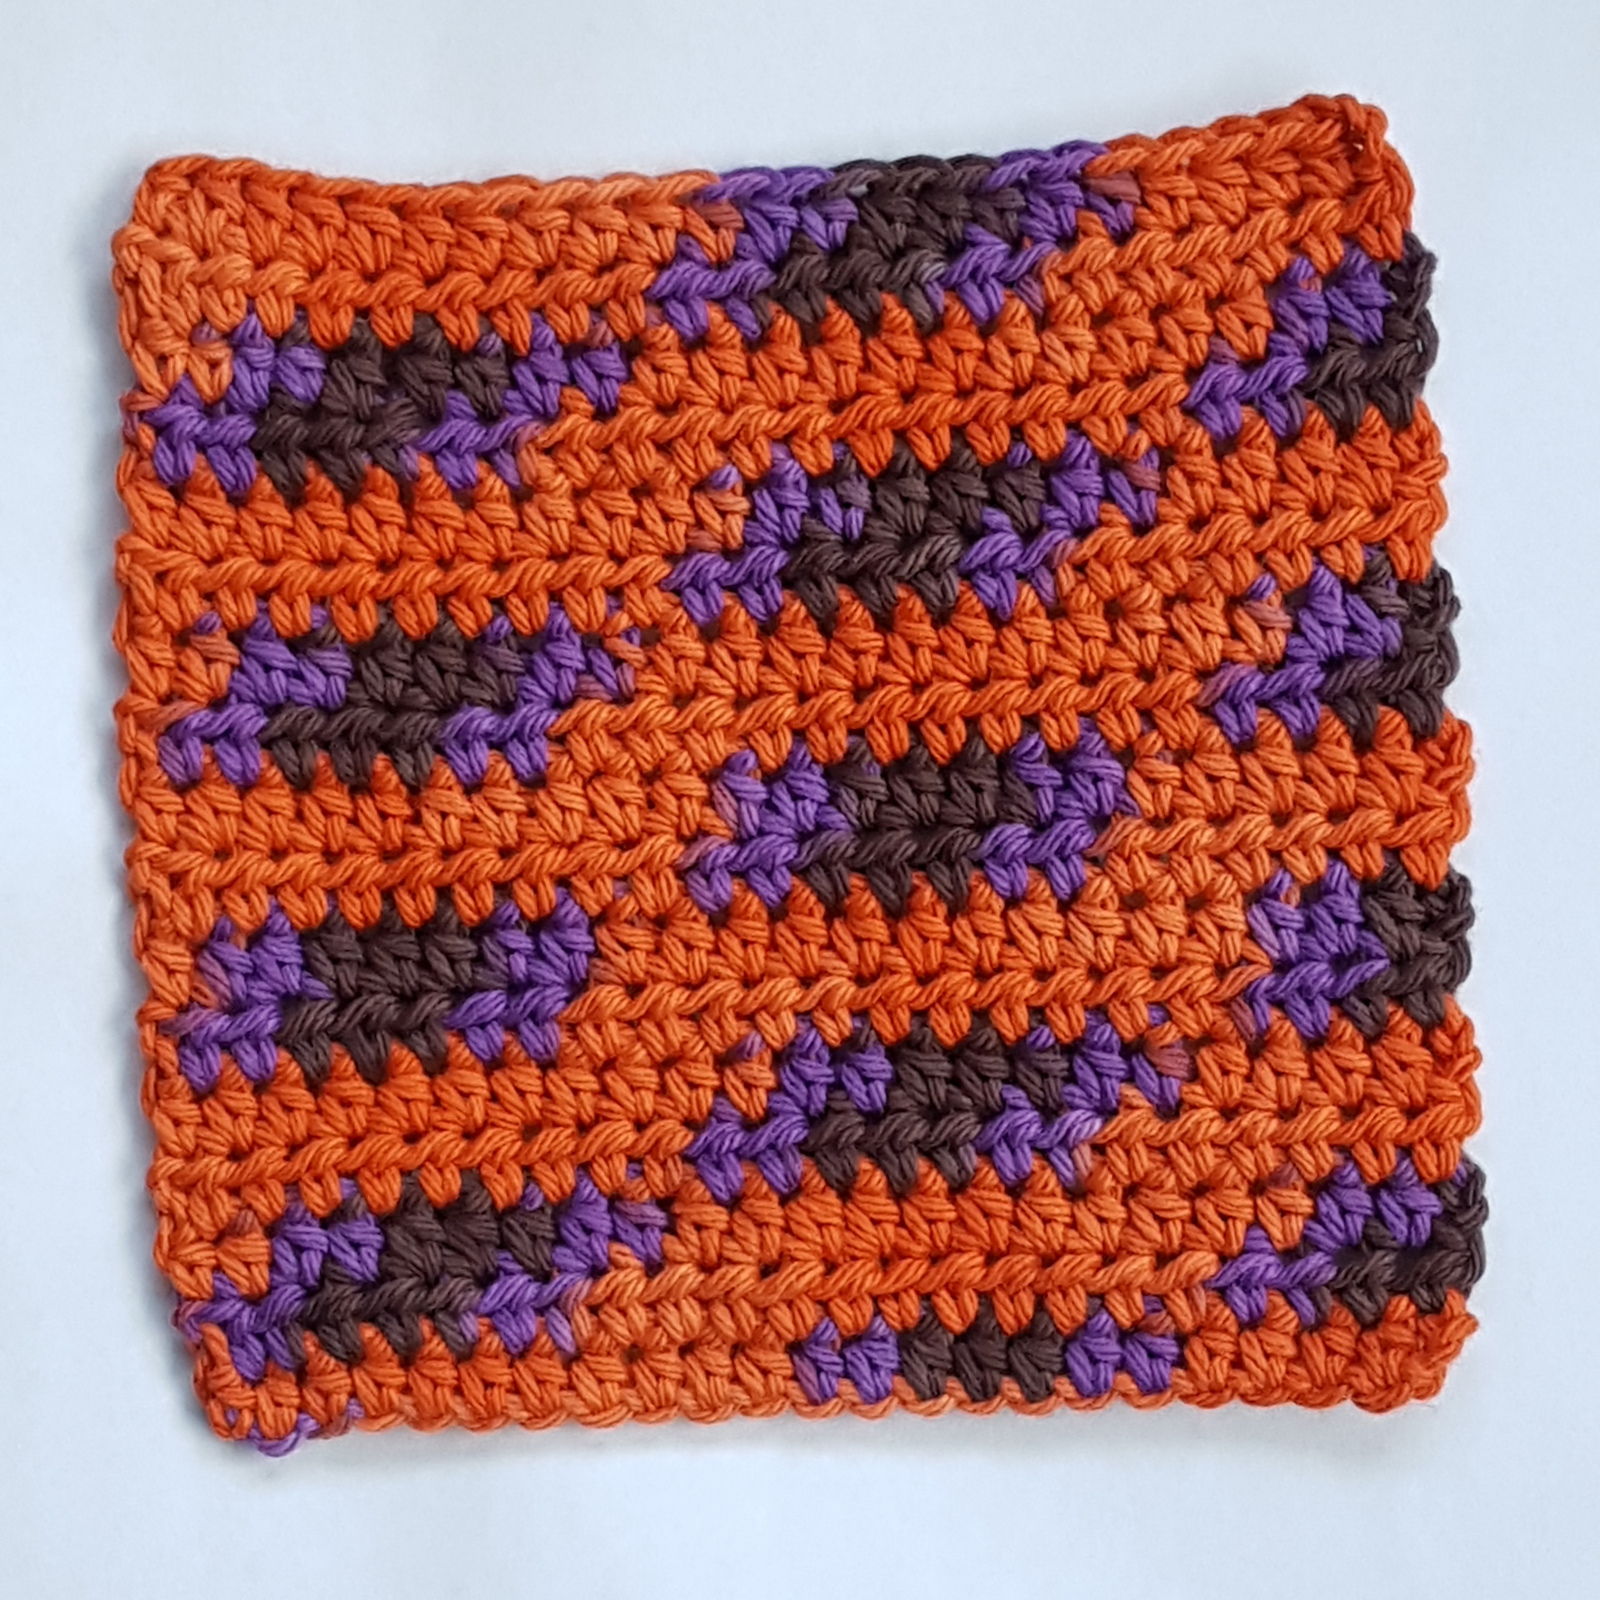 Beginner’s HDC Crochet Dishcloth Pattern